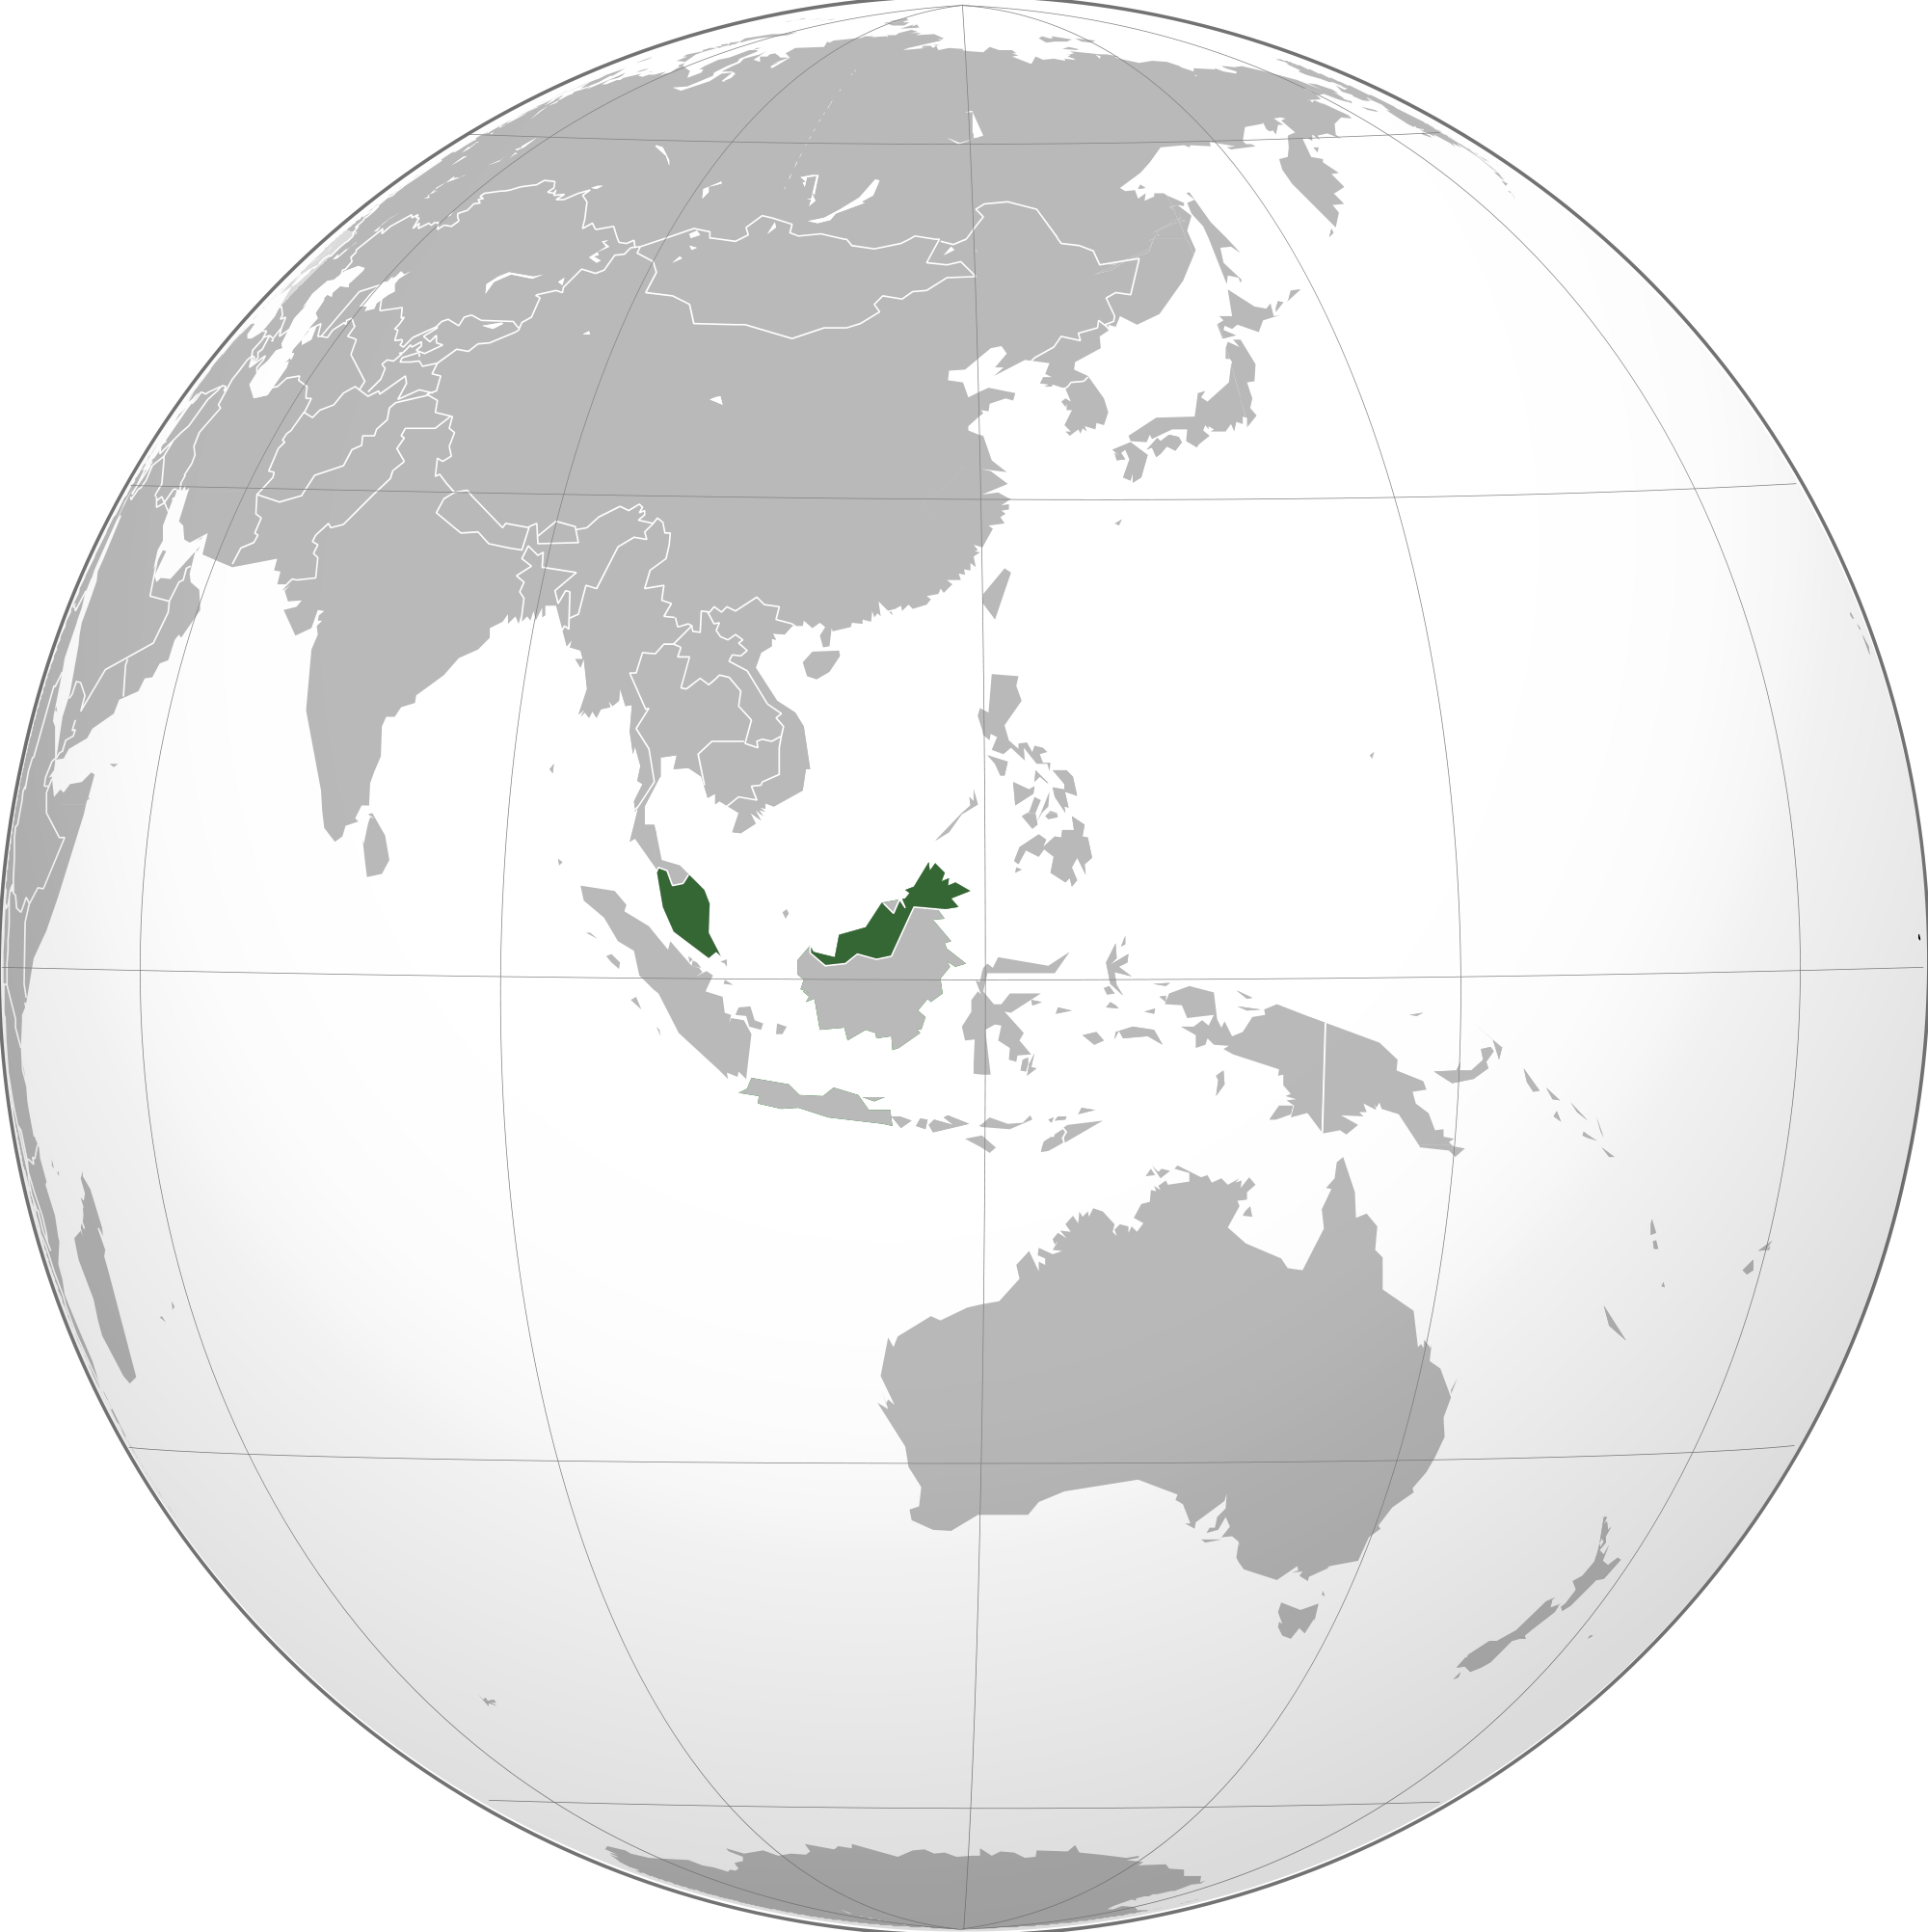 Malaysia Map World Kinderzimmer 2018